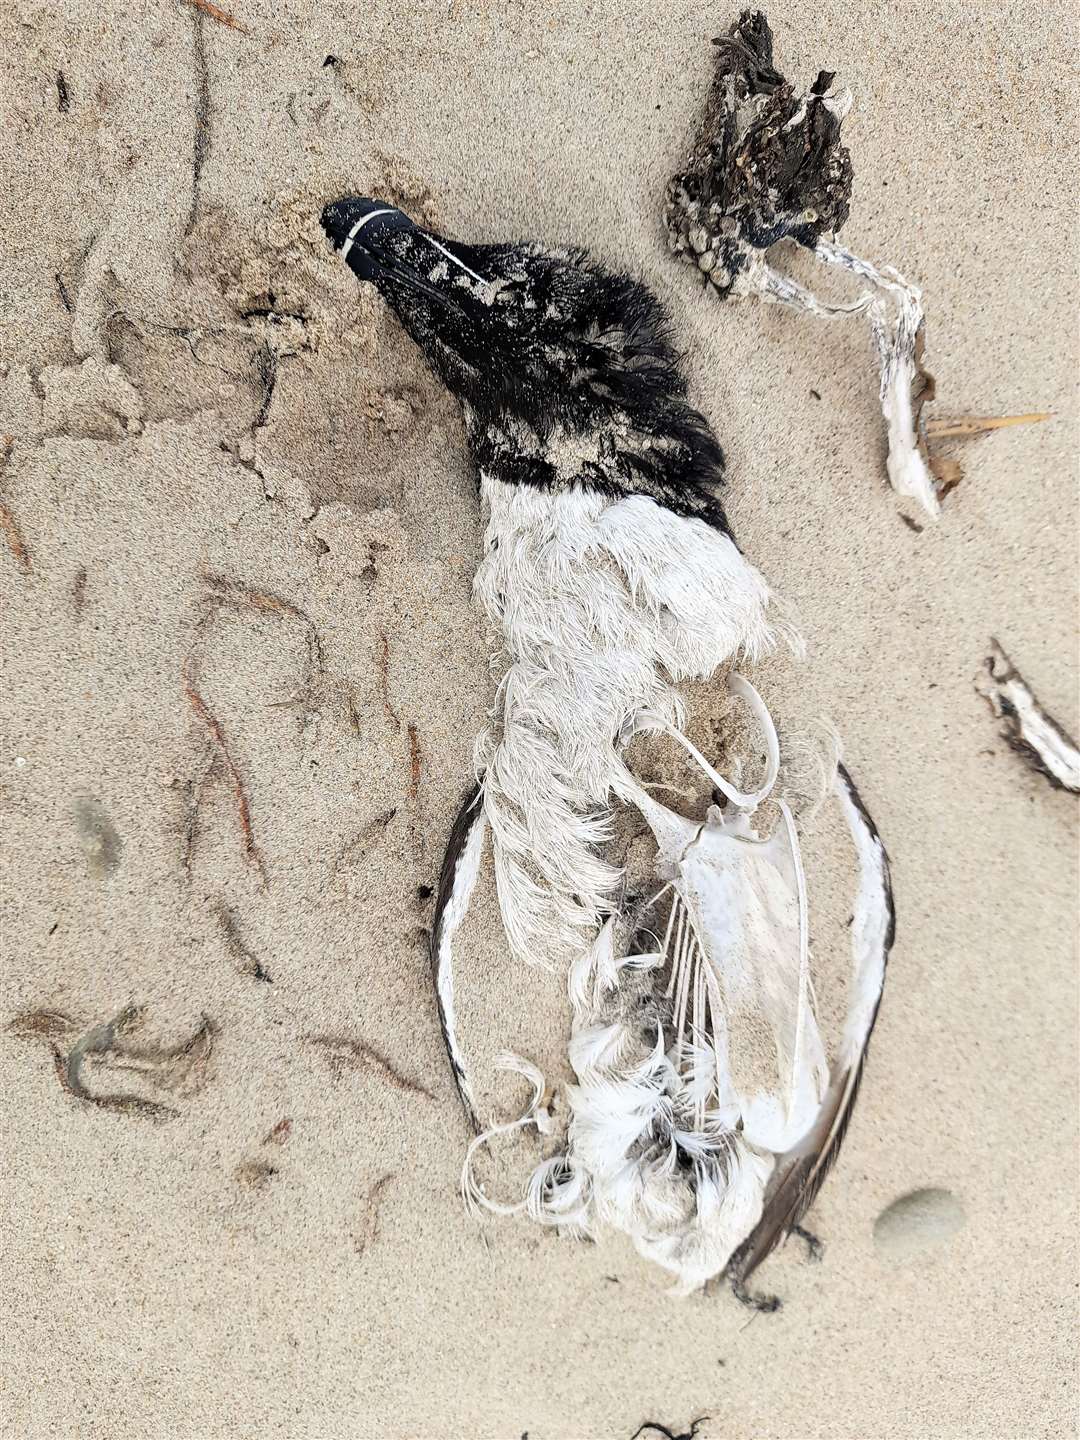 A razorbill lies decomposing on Dunnet beach. Dorcas Sinclair believes these dead birds could pose a significant health hazard.